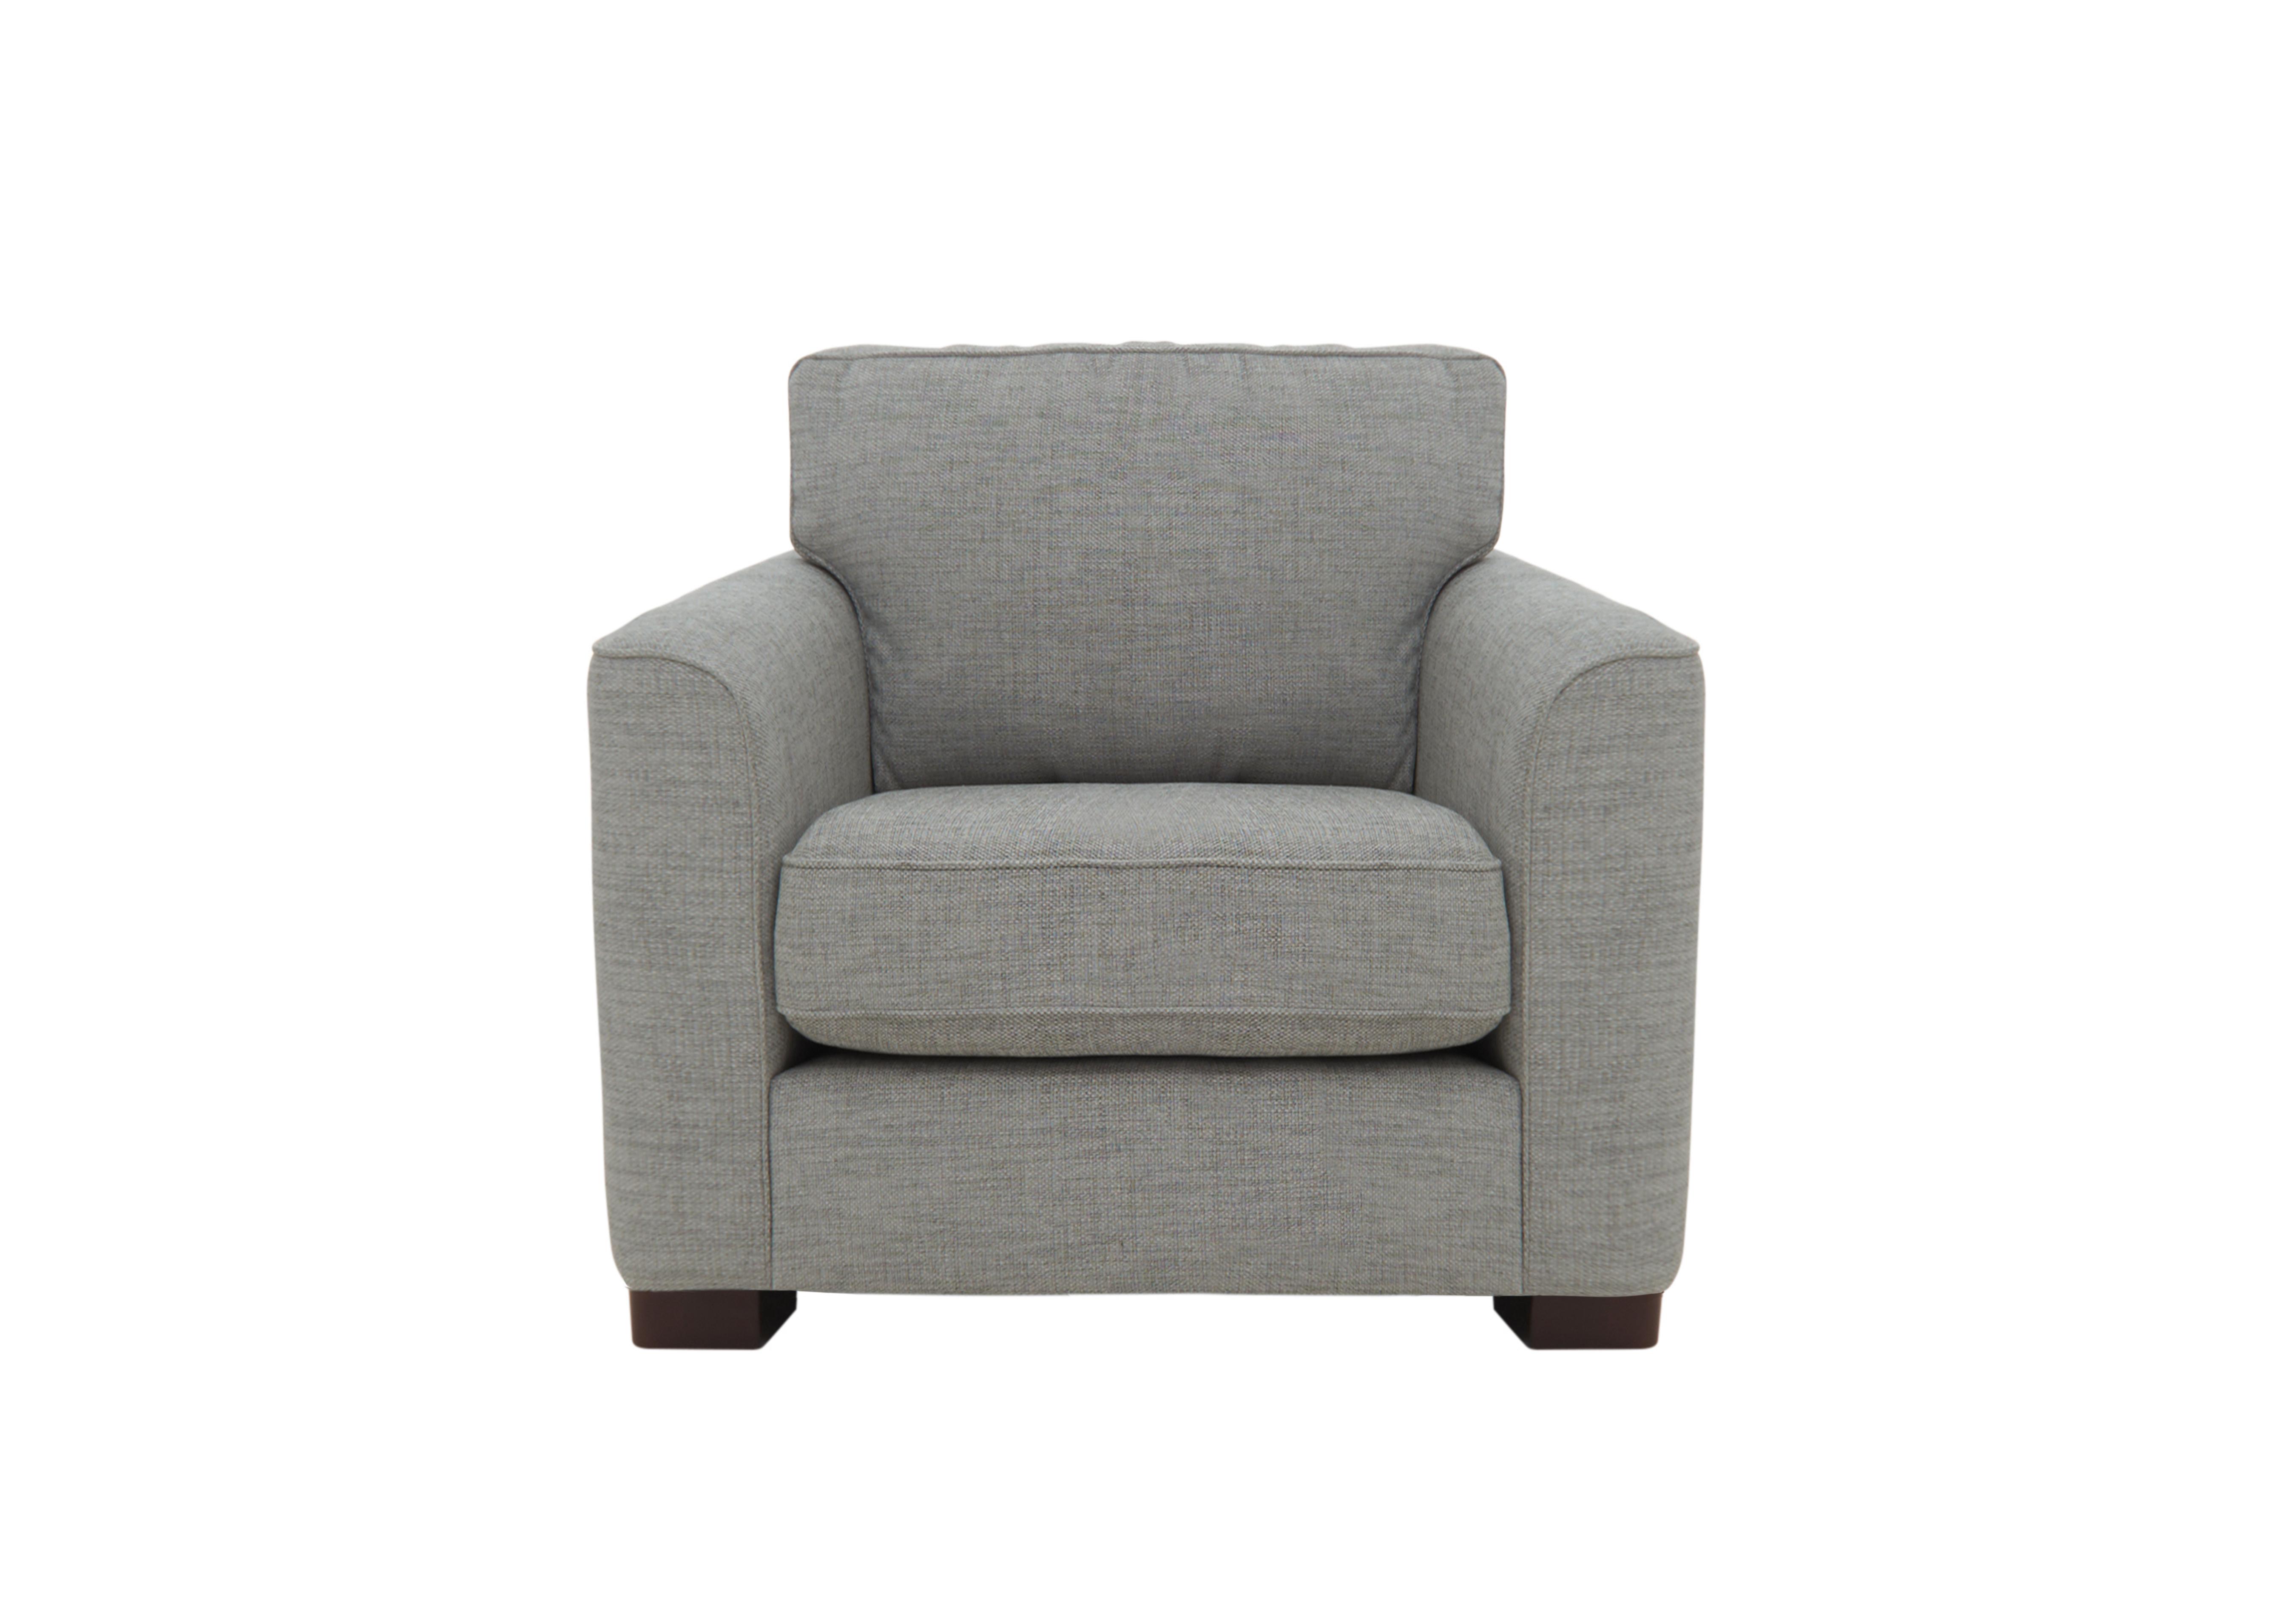 Elora Standard Fabric Armchair in Kento 301 Warm Grey Dbf on Furniture Village